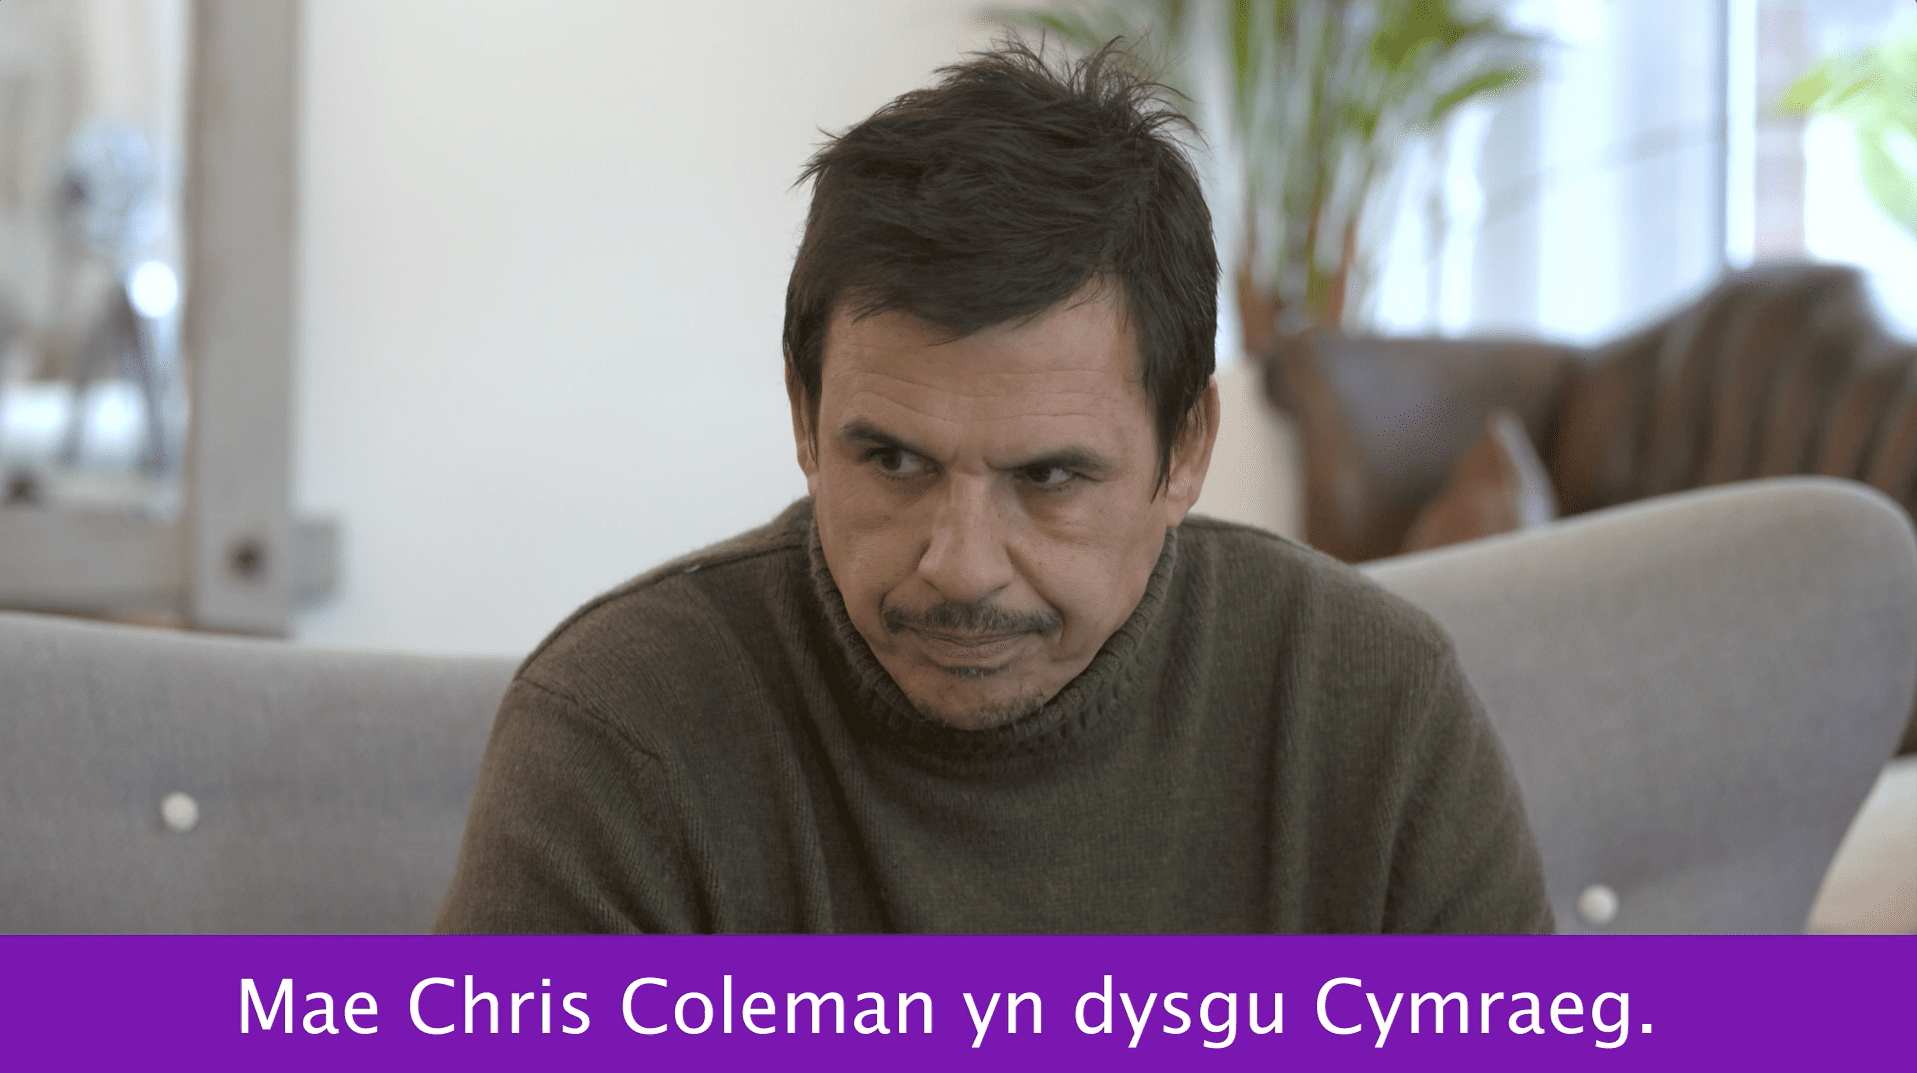 Chris Coleman